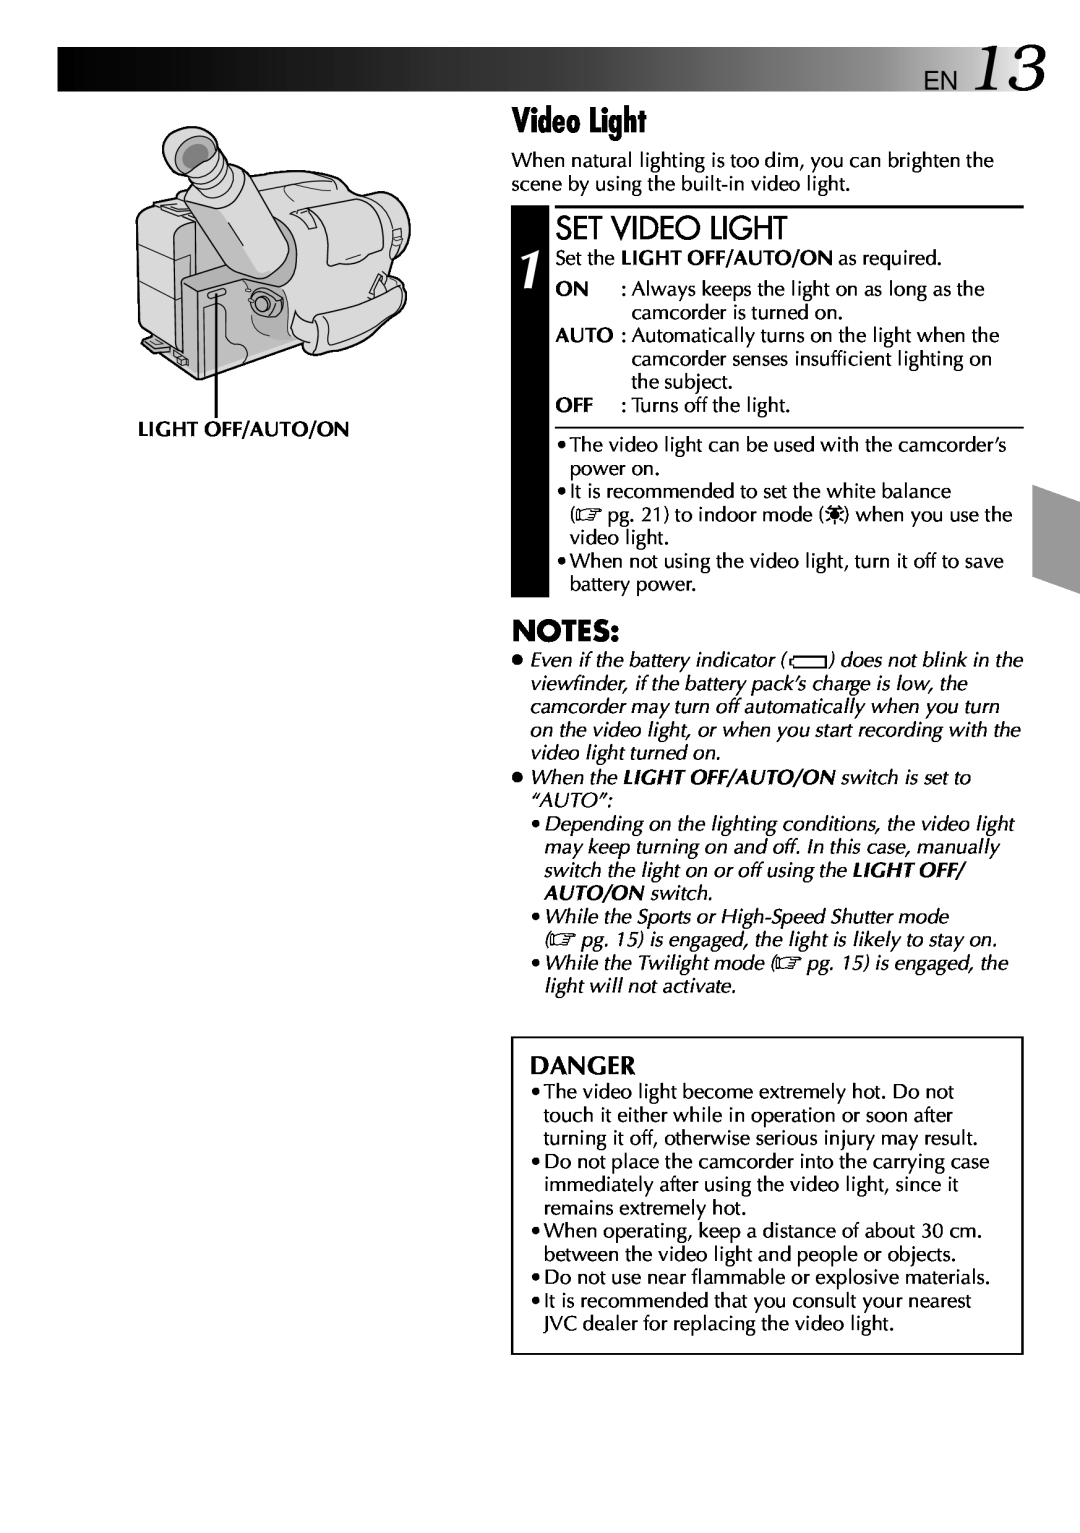 JVC LYT0002-082A manual Set Video Light, Danger, Light Off/Auto/On 